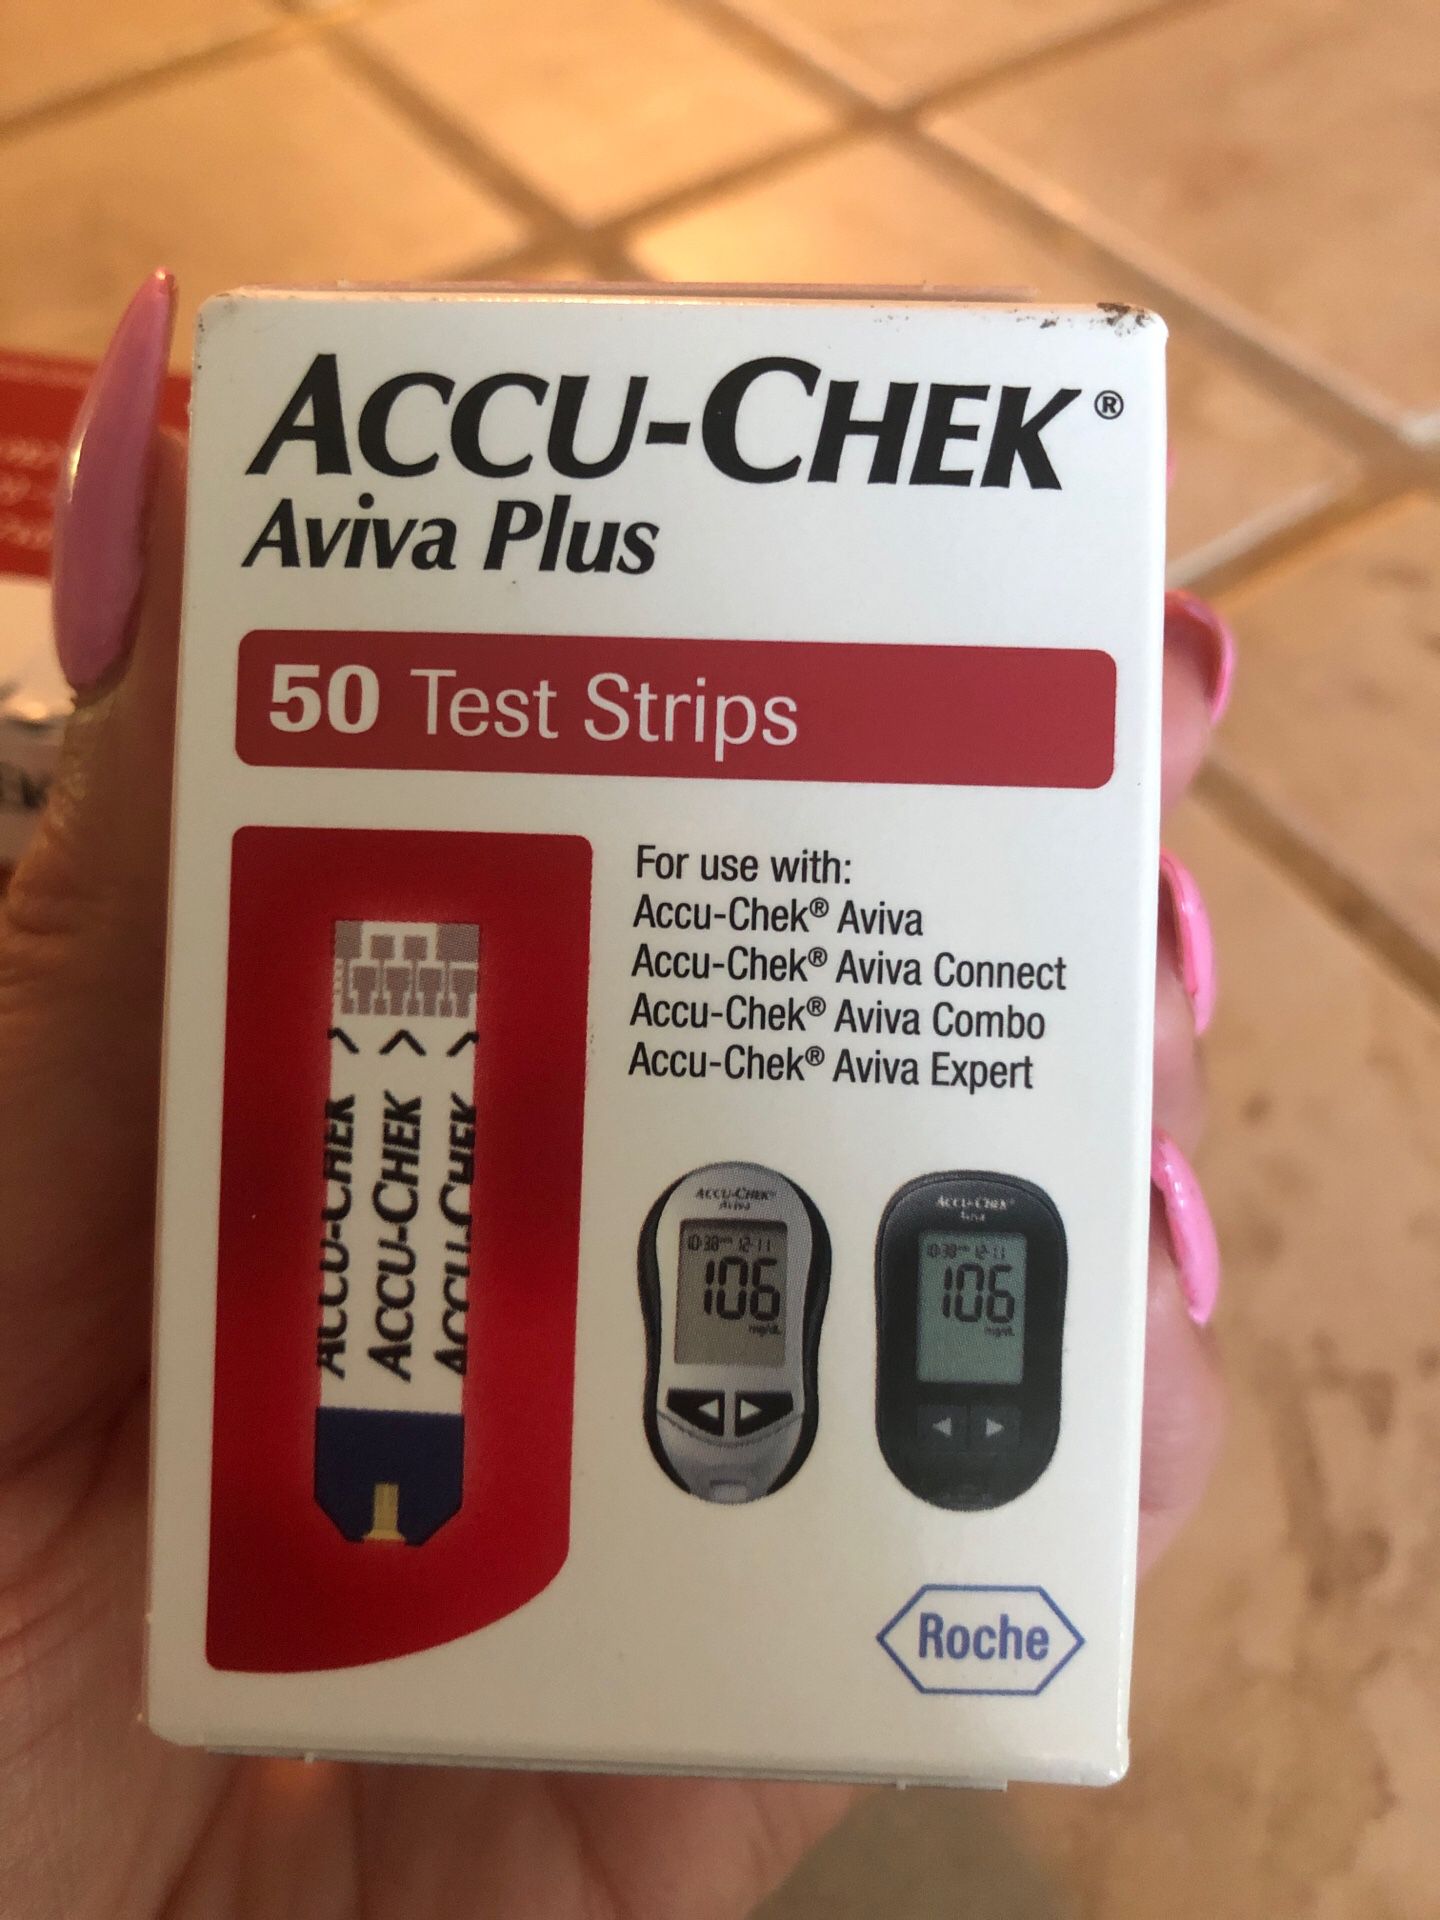 ACCU-CHEK aviva plus glucose test strips